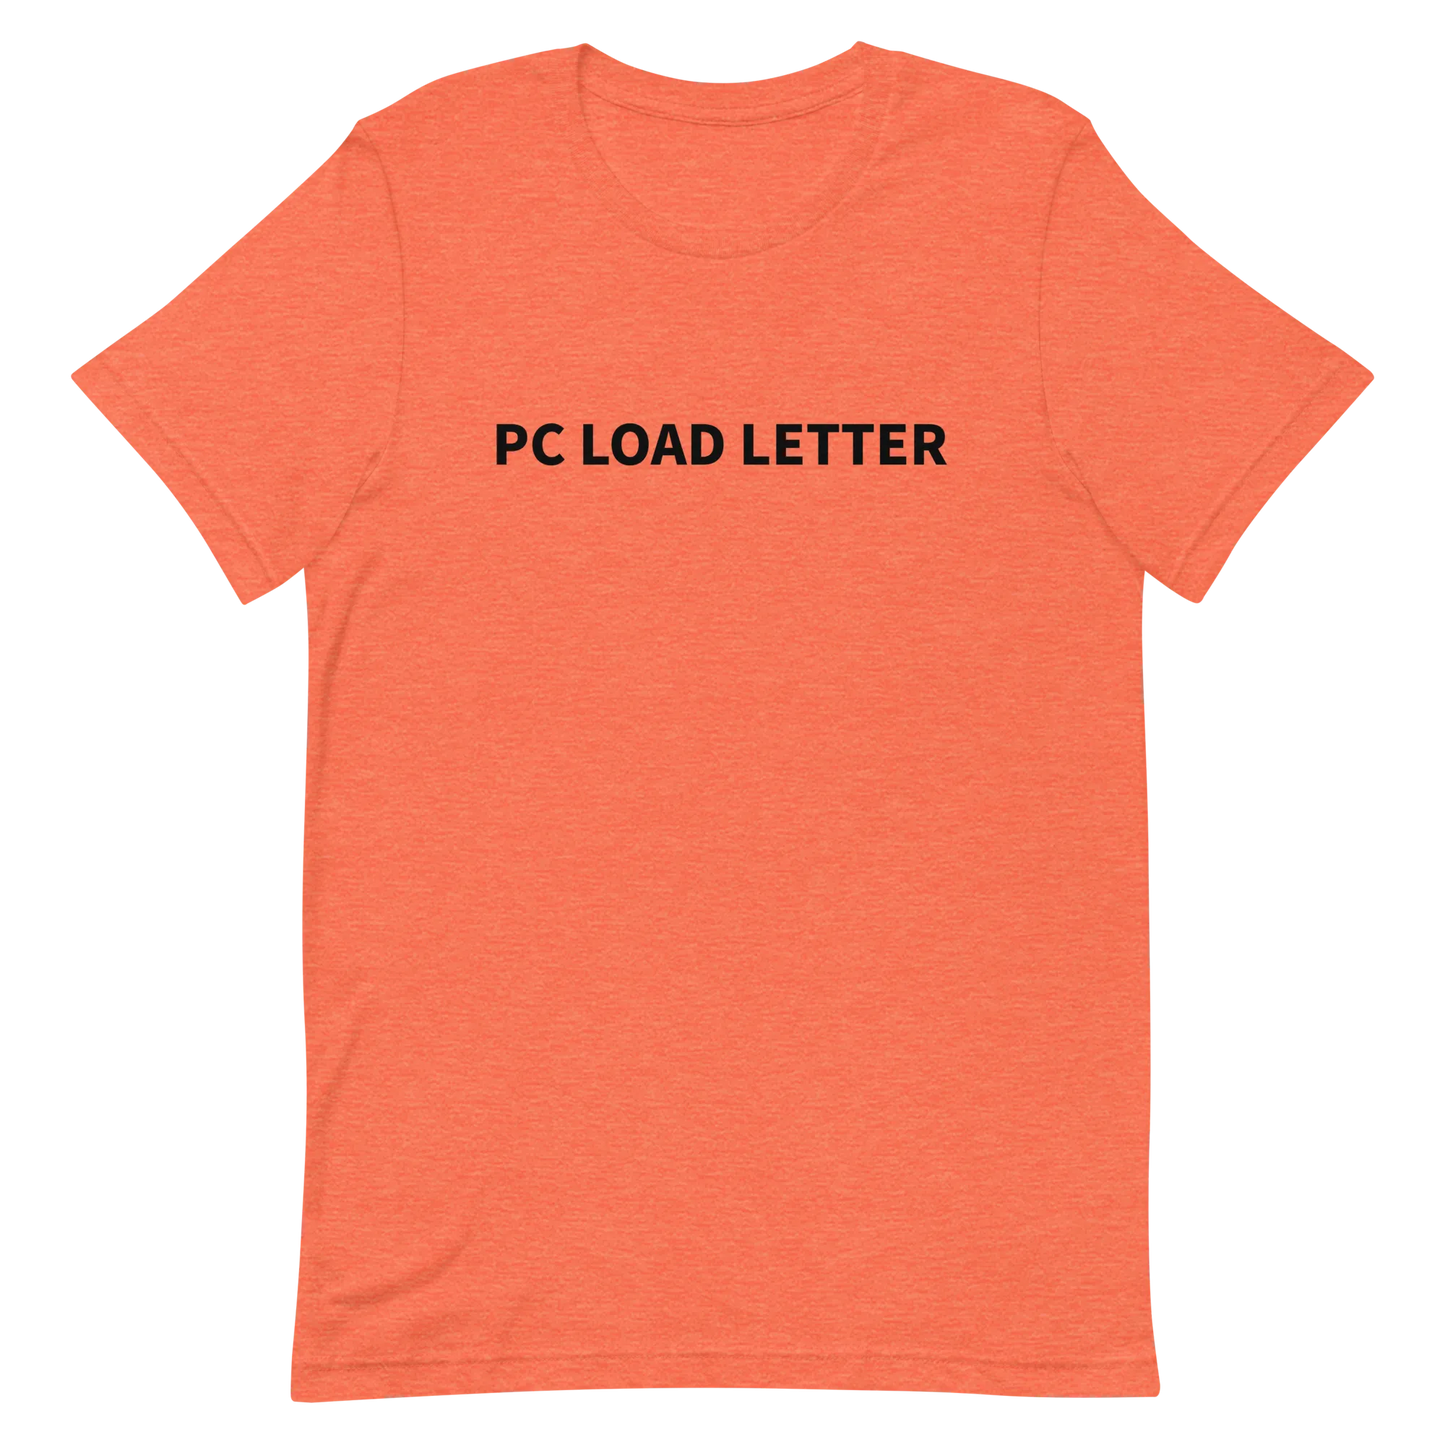 PC Load Letter Tee in Heather Orange flatlay